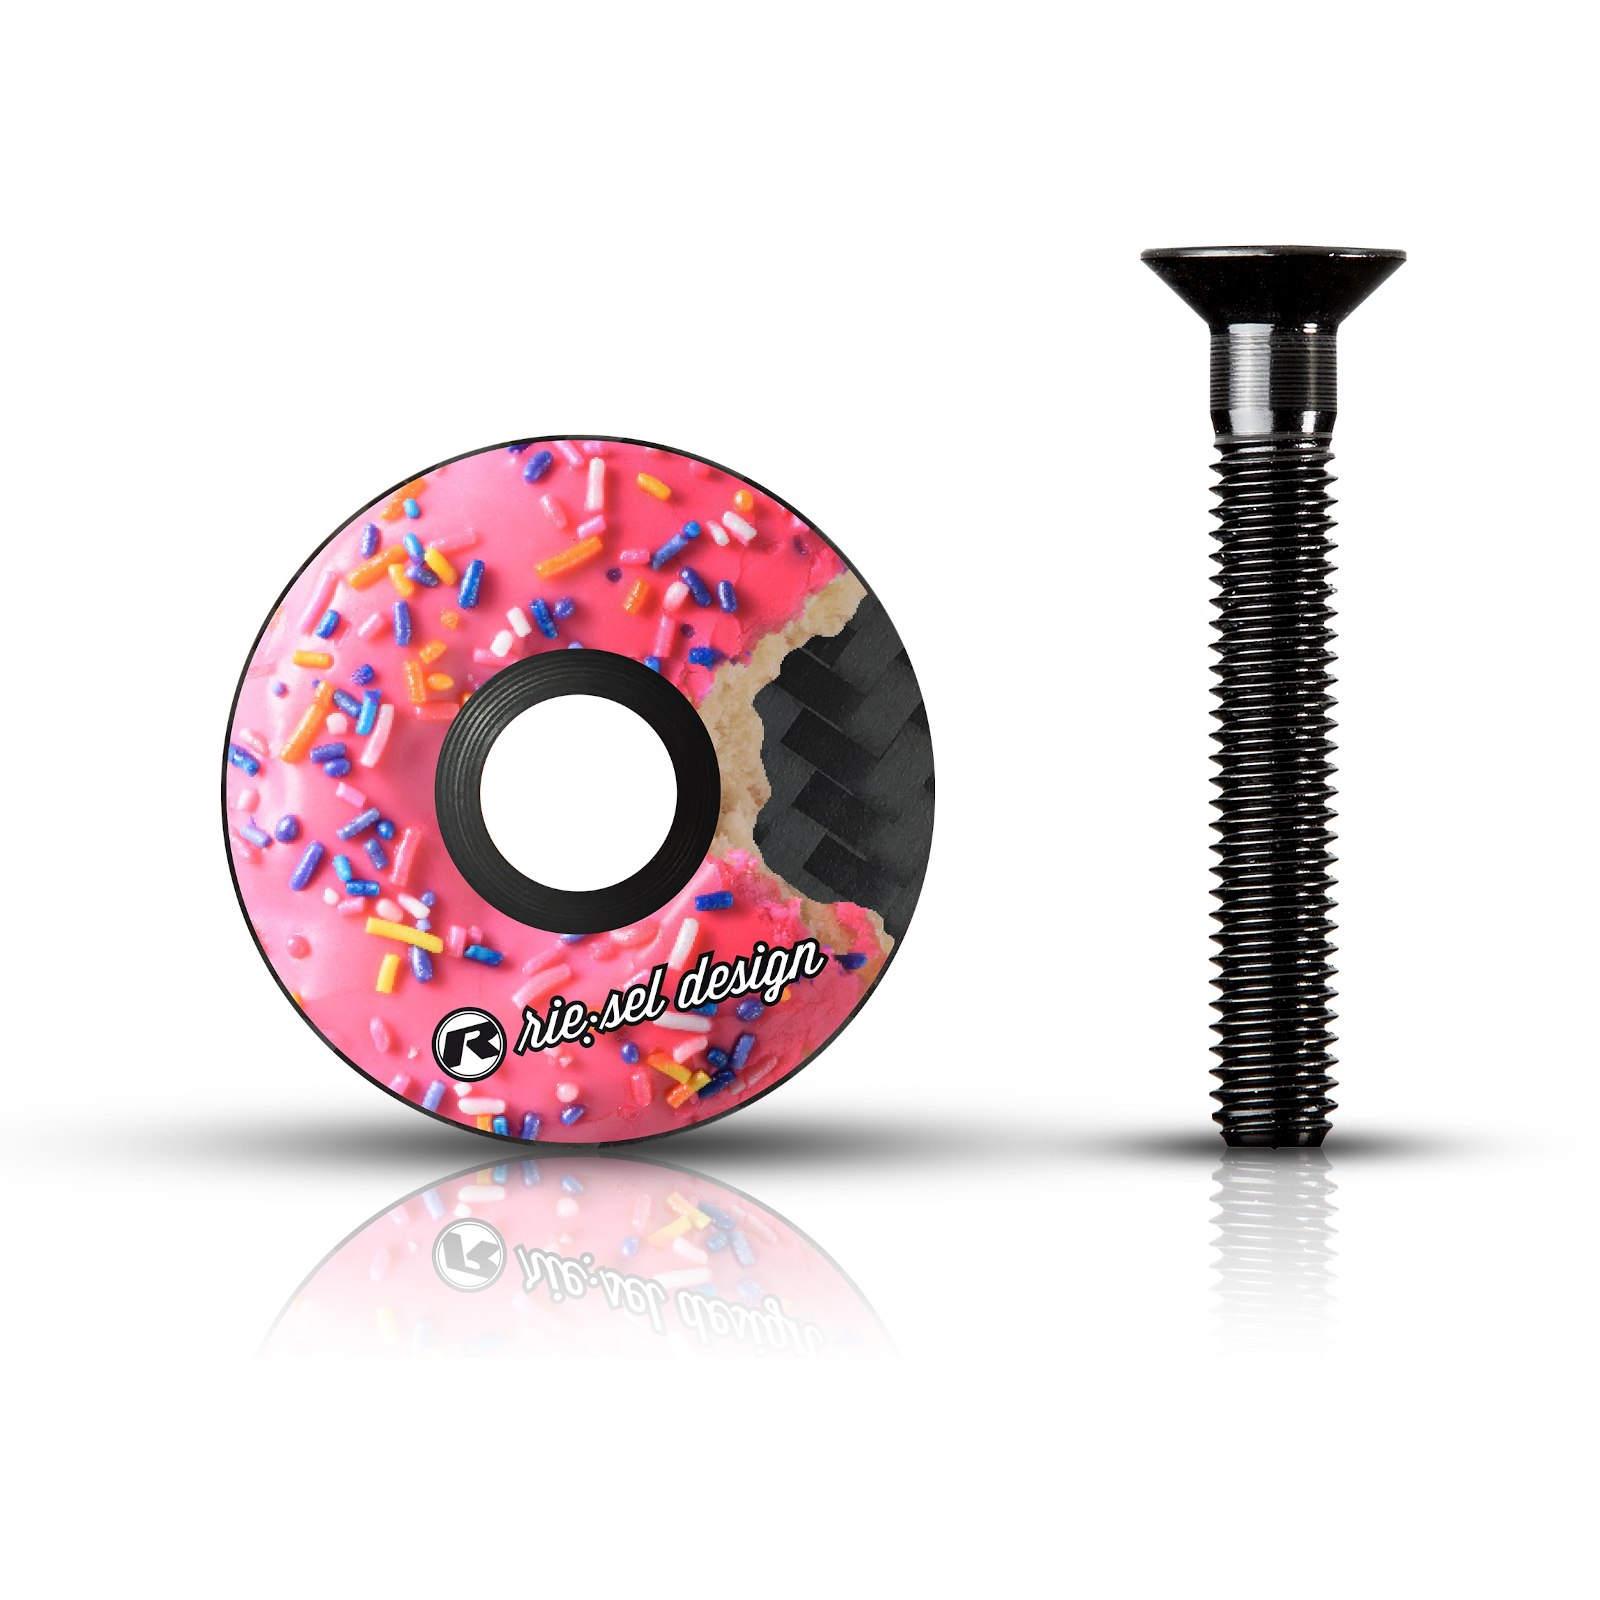 Produktbild von rie:sel design stem:cap Carbon Aheadkappe - donut mk II